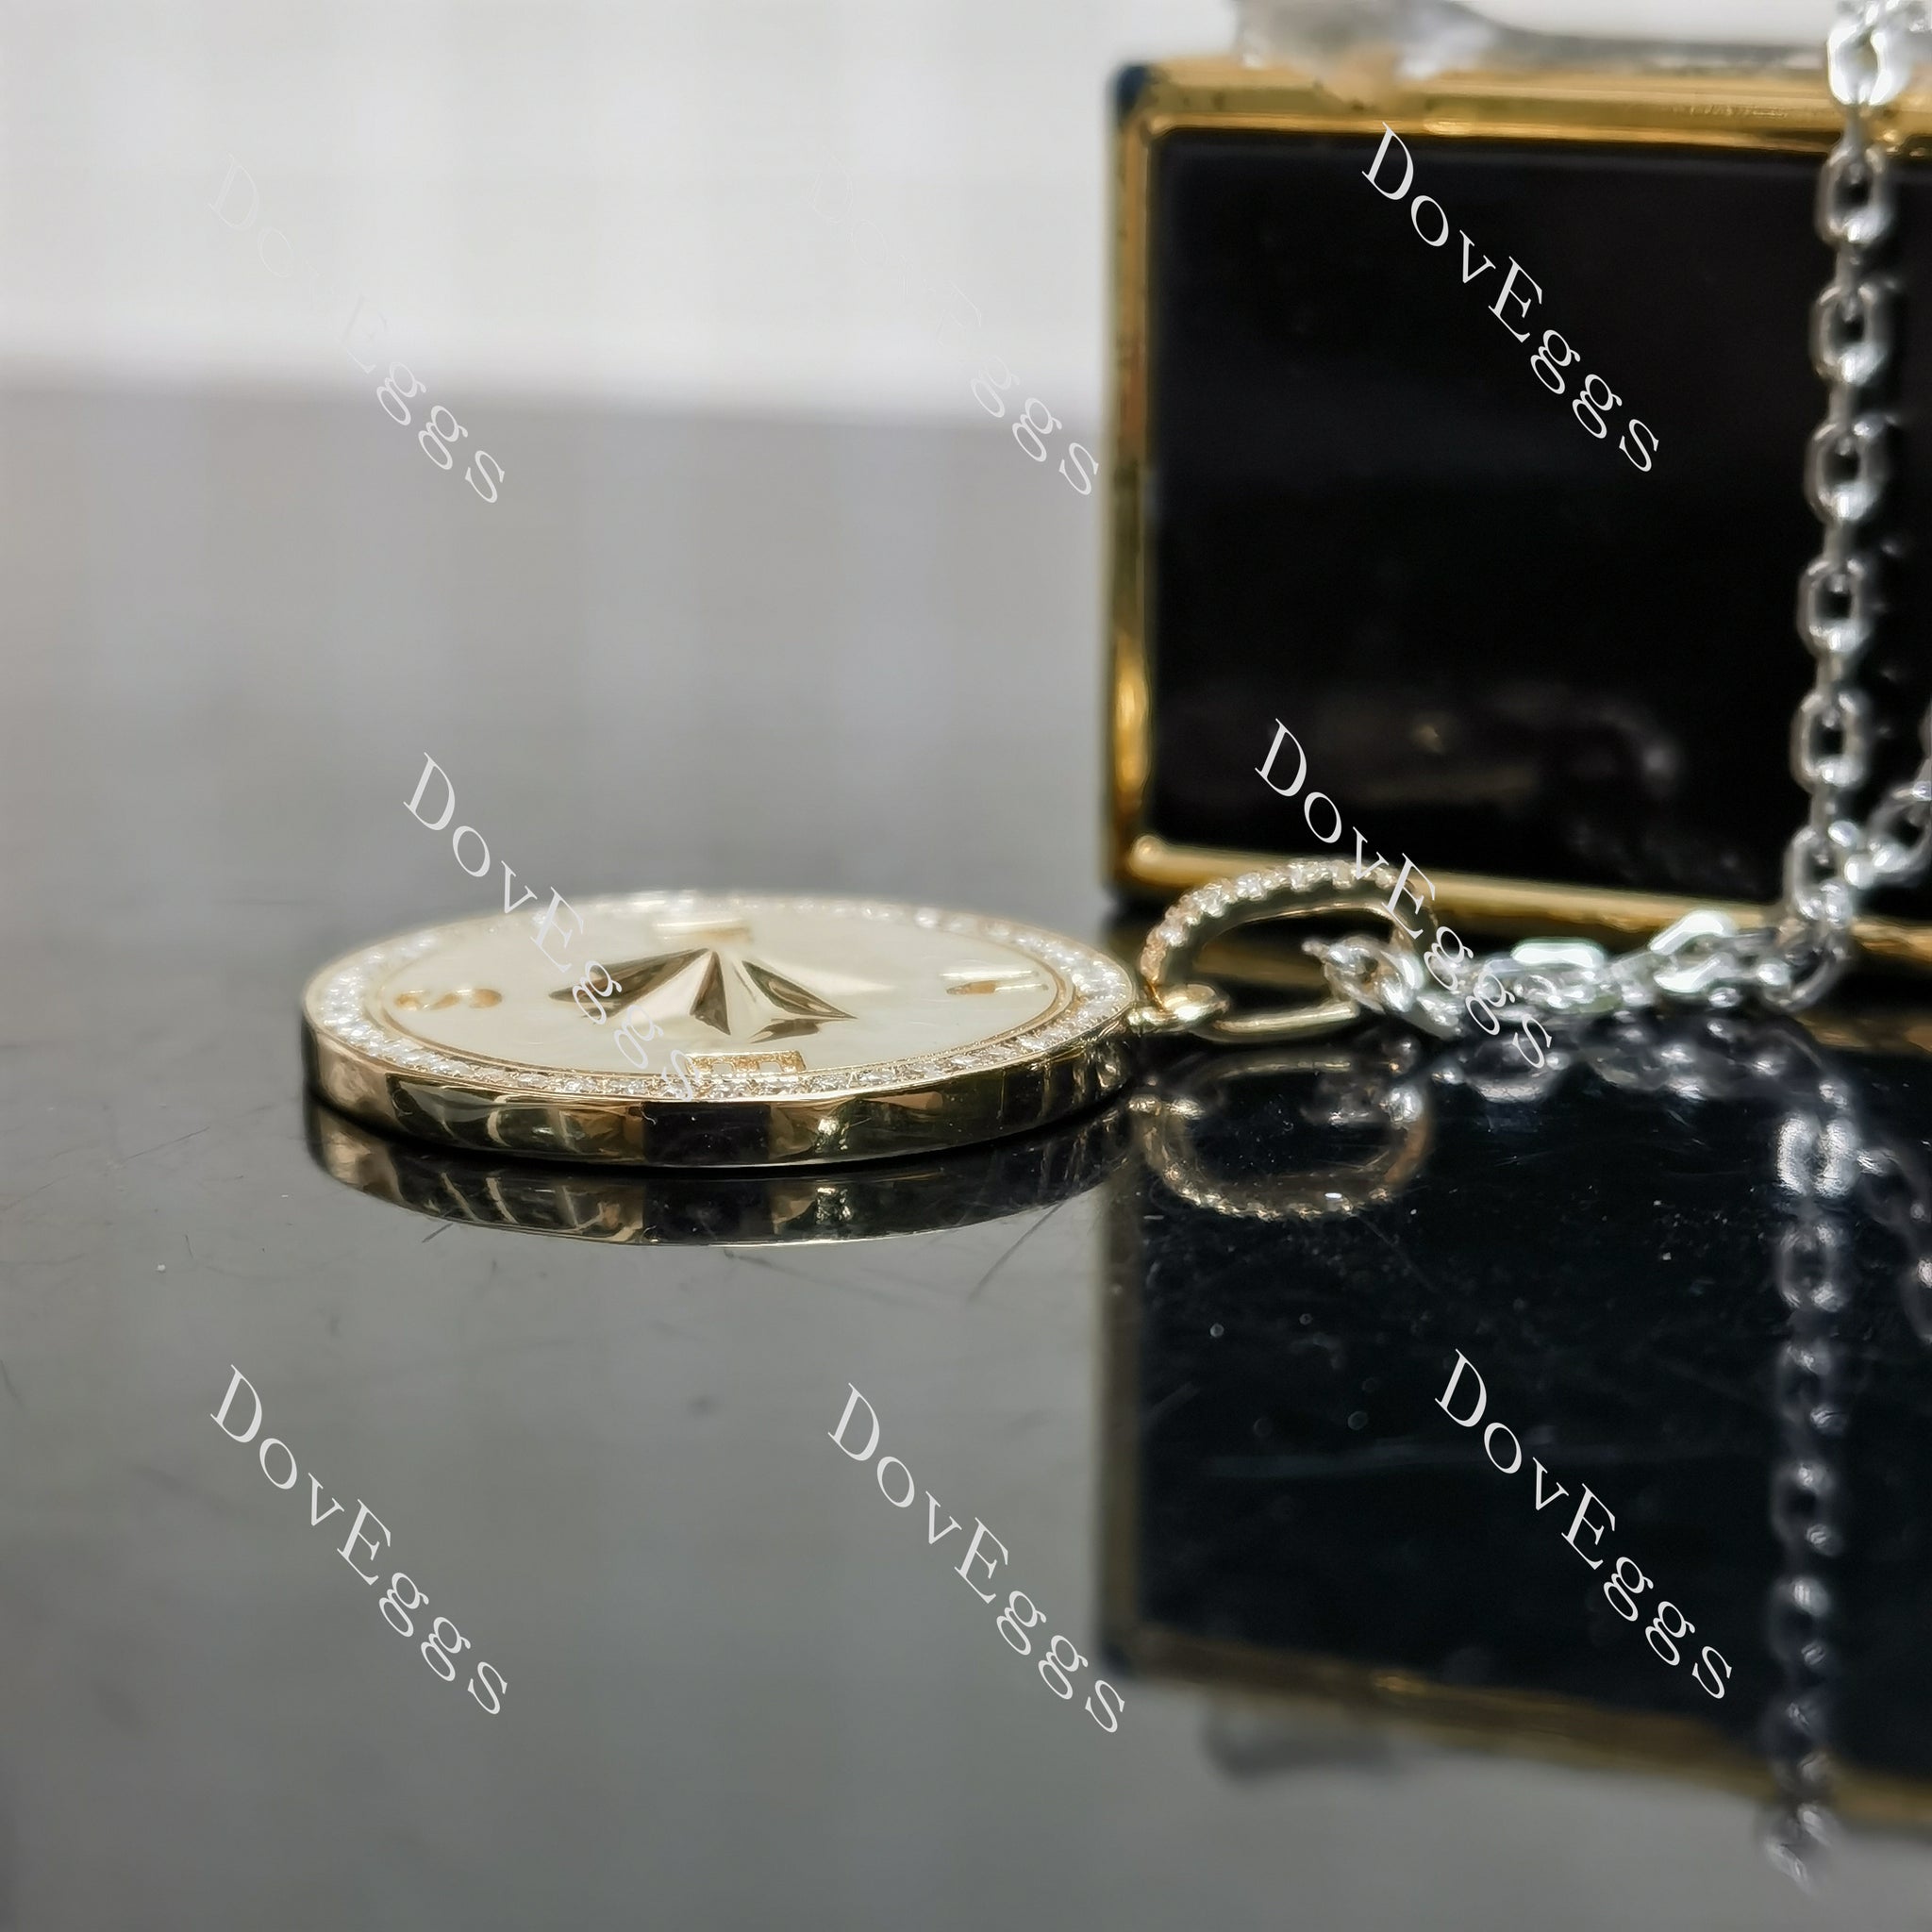 Doveggs compass round moissanite/lad grown diamond pendant necklace(pendant only)